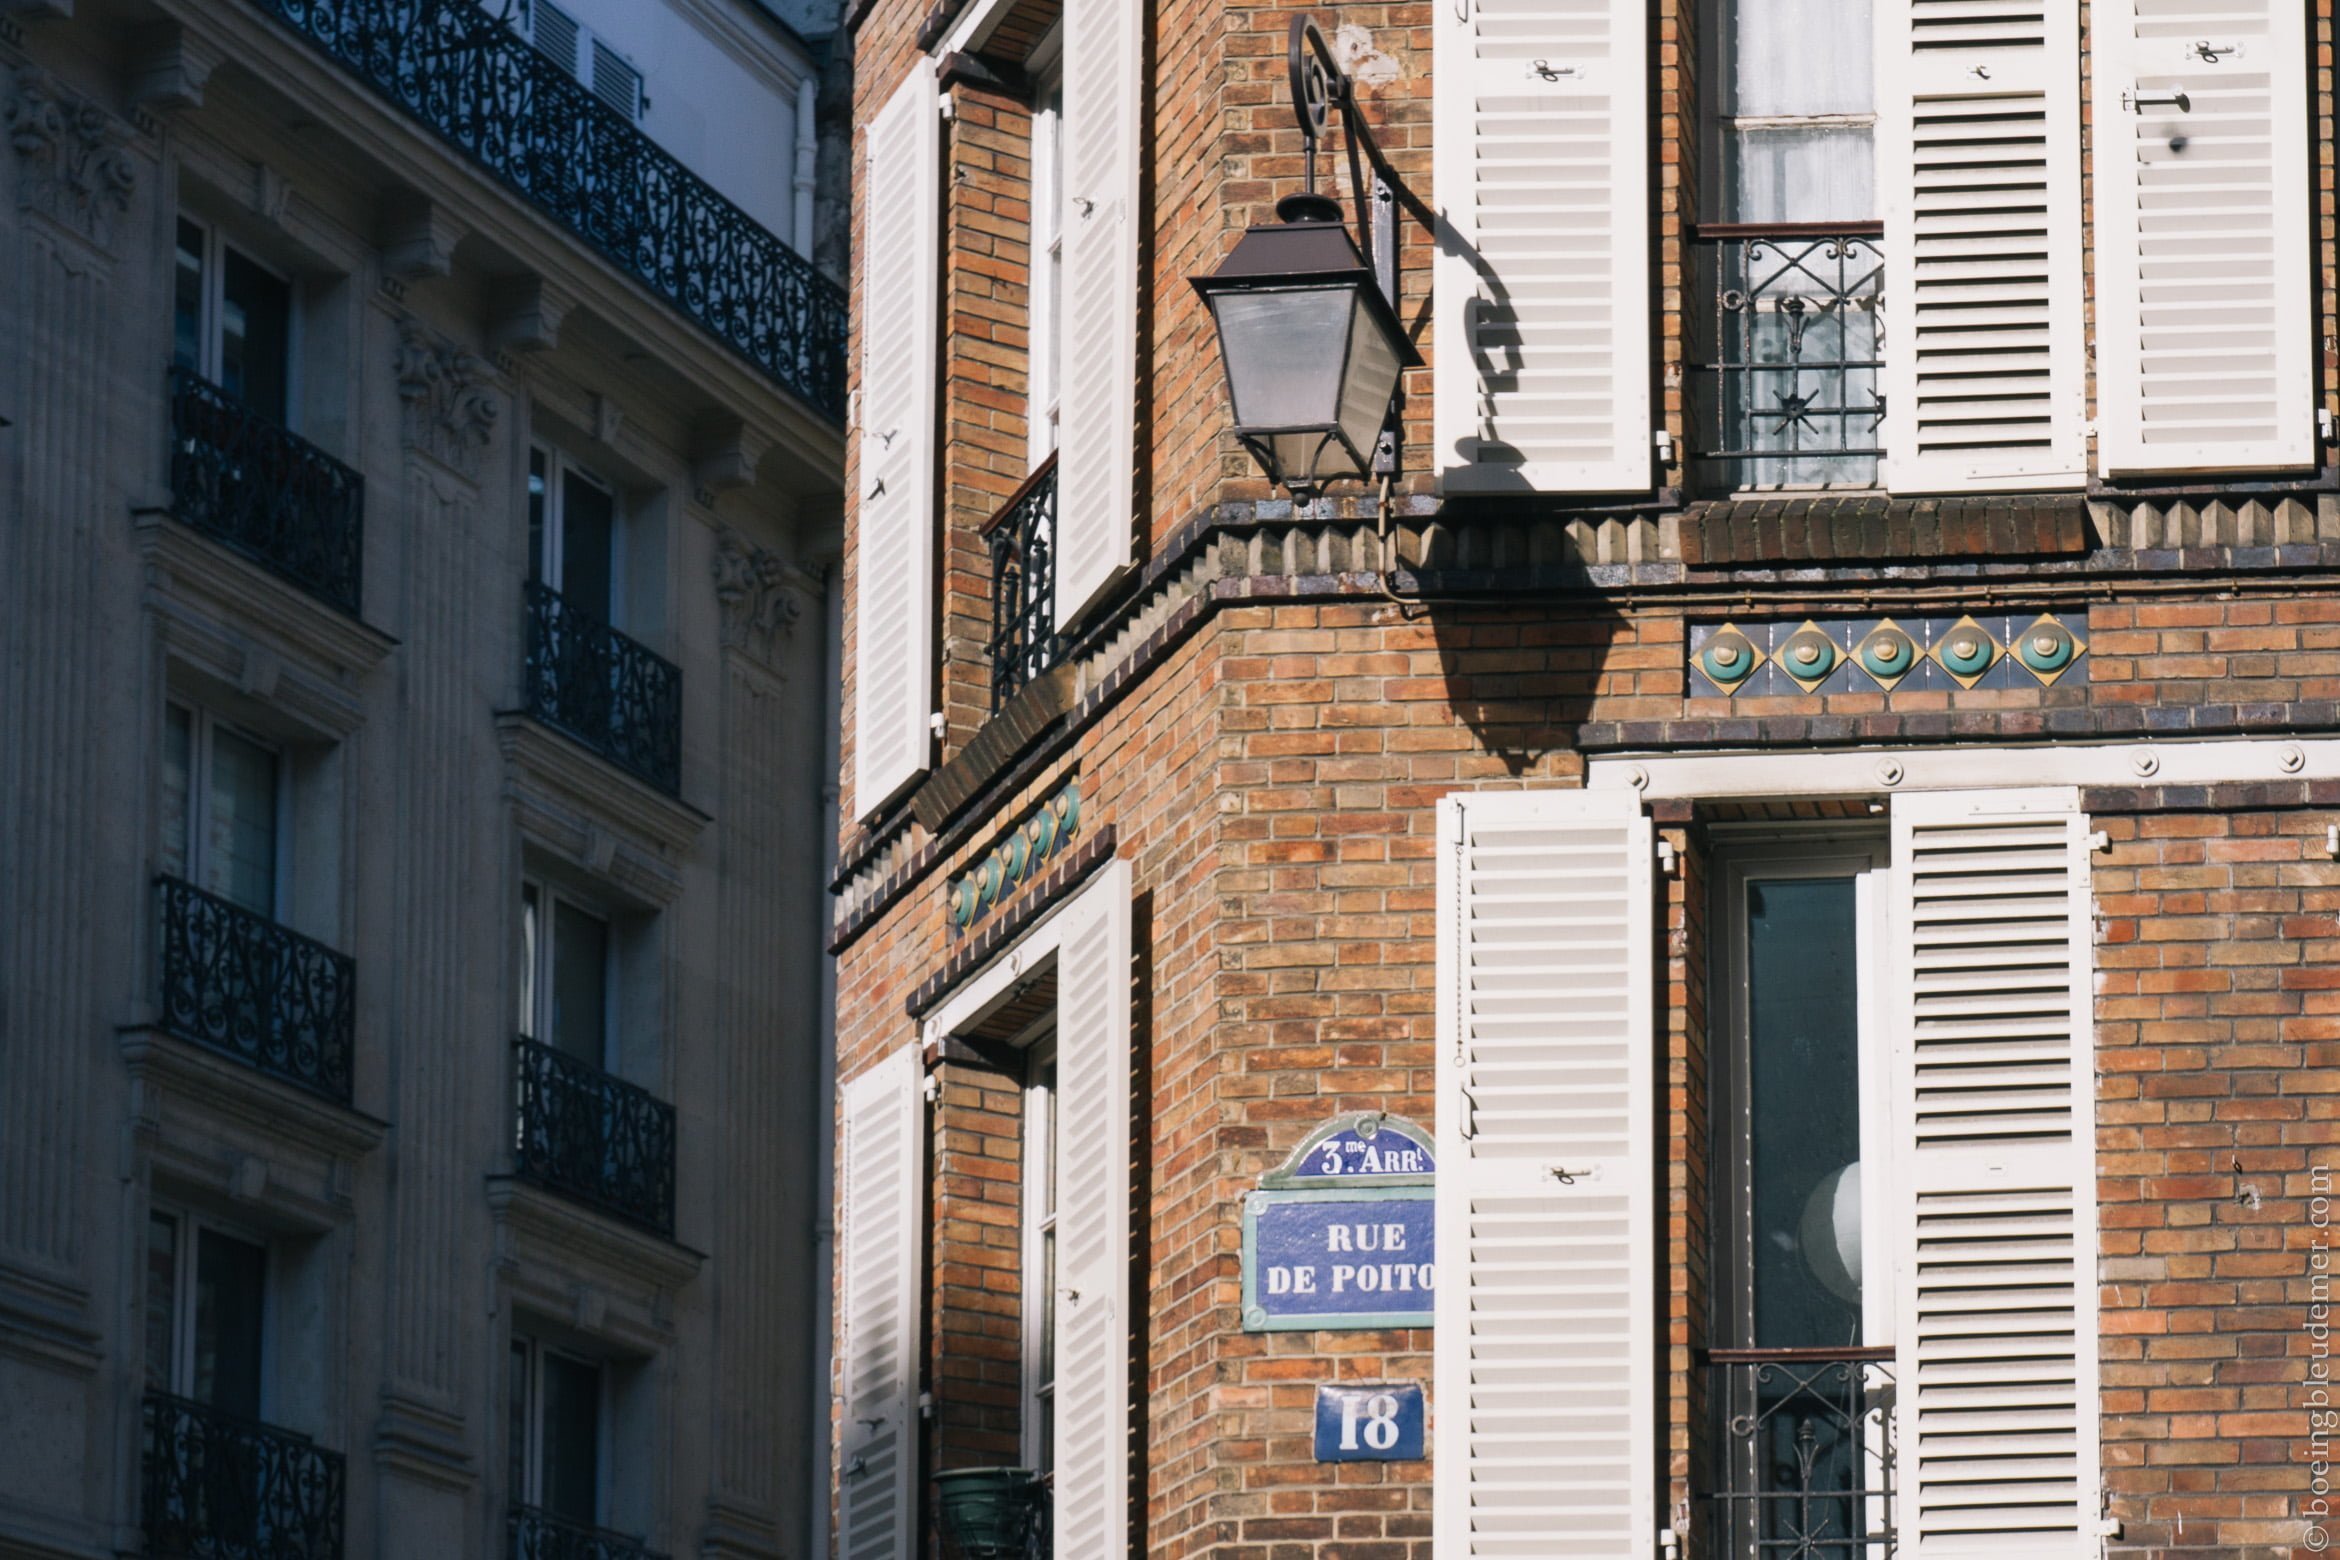 rue de Paris